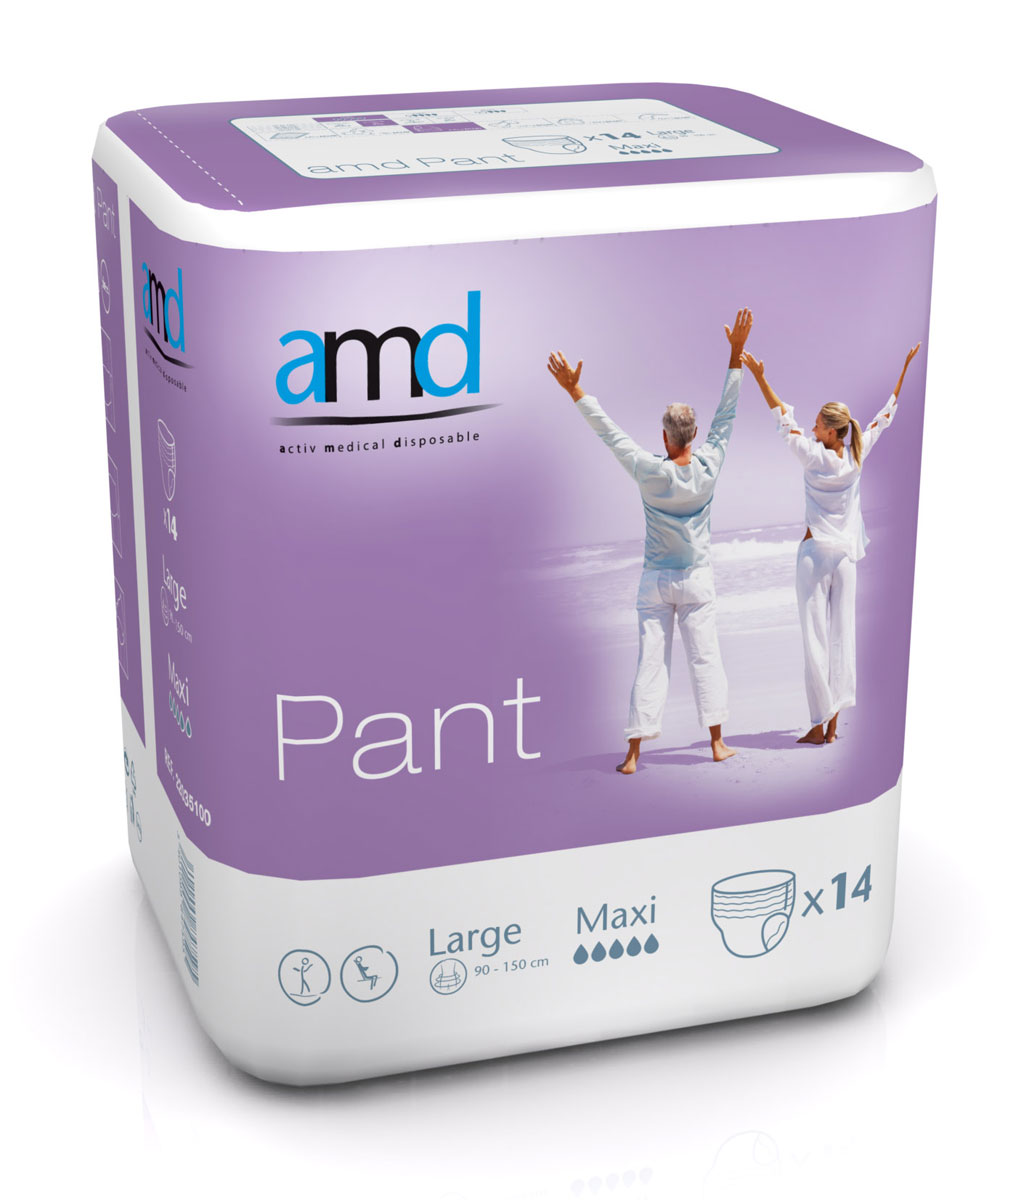 AMD Pant (MAXI) - saugstarke Inkontinenzpants - Gr. Large (L) - 6x14 St. Karton